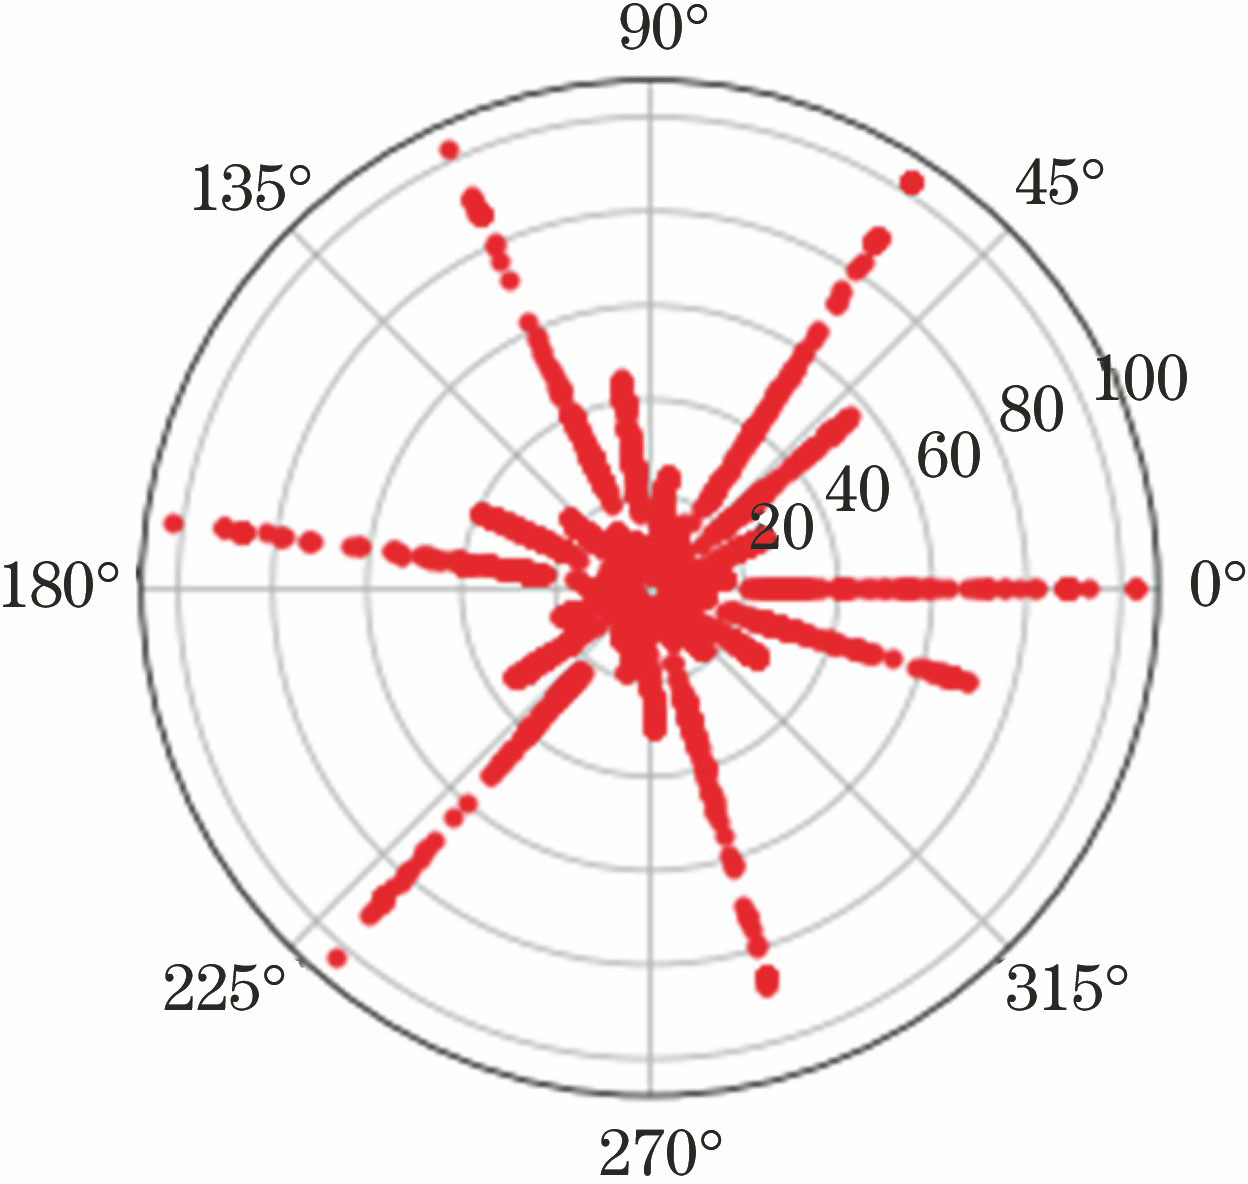 Radar scatter plot